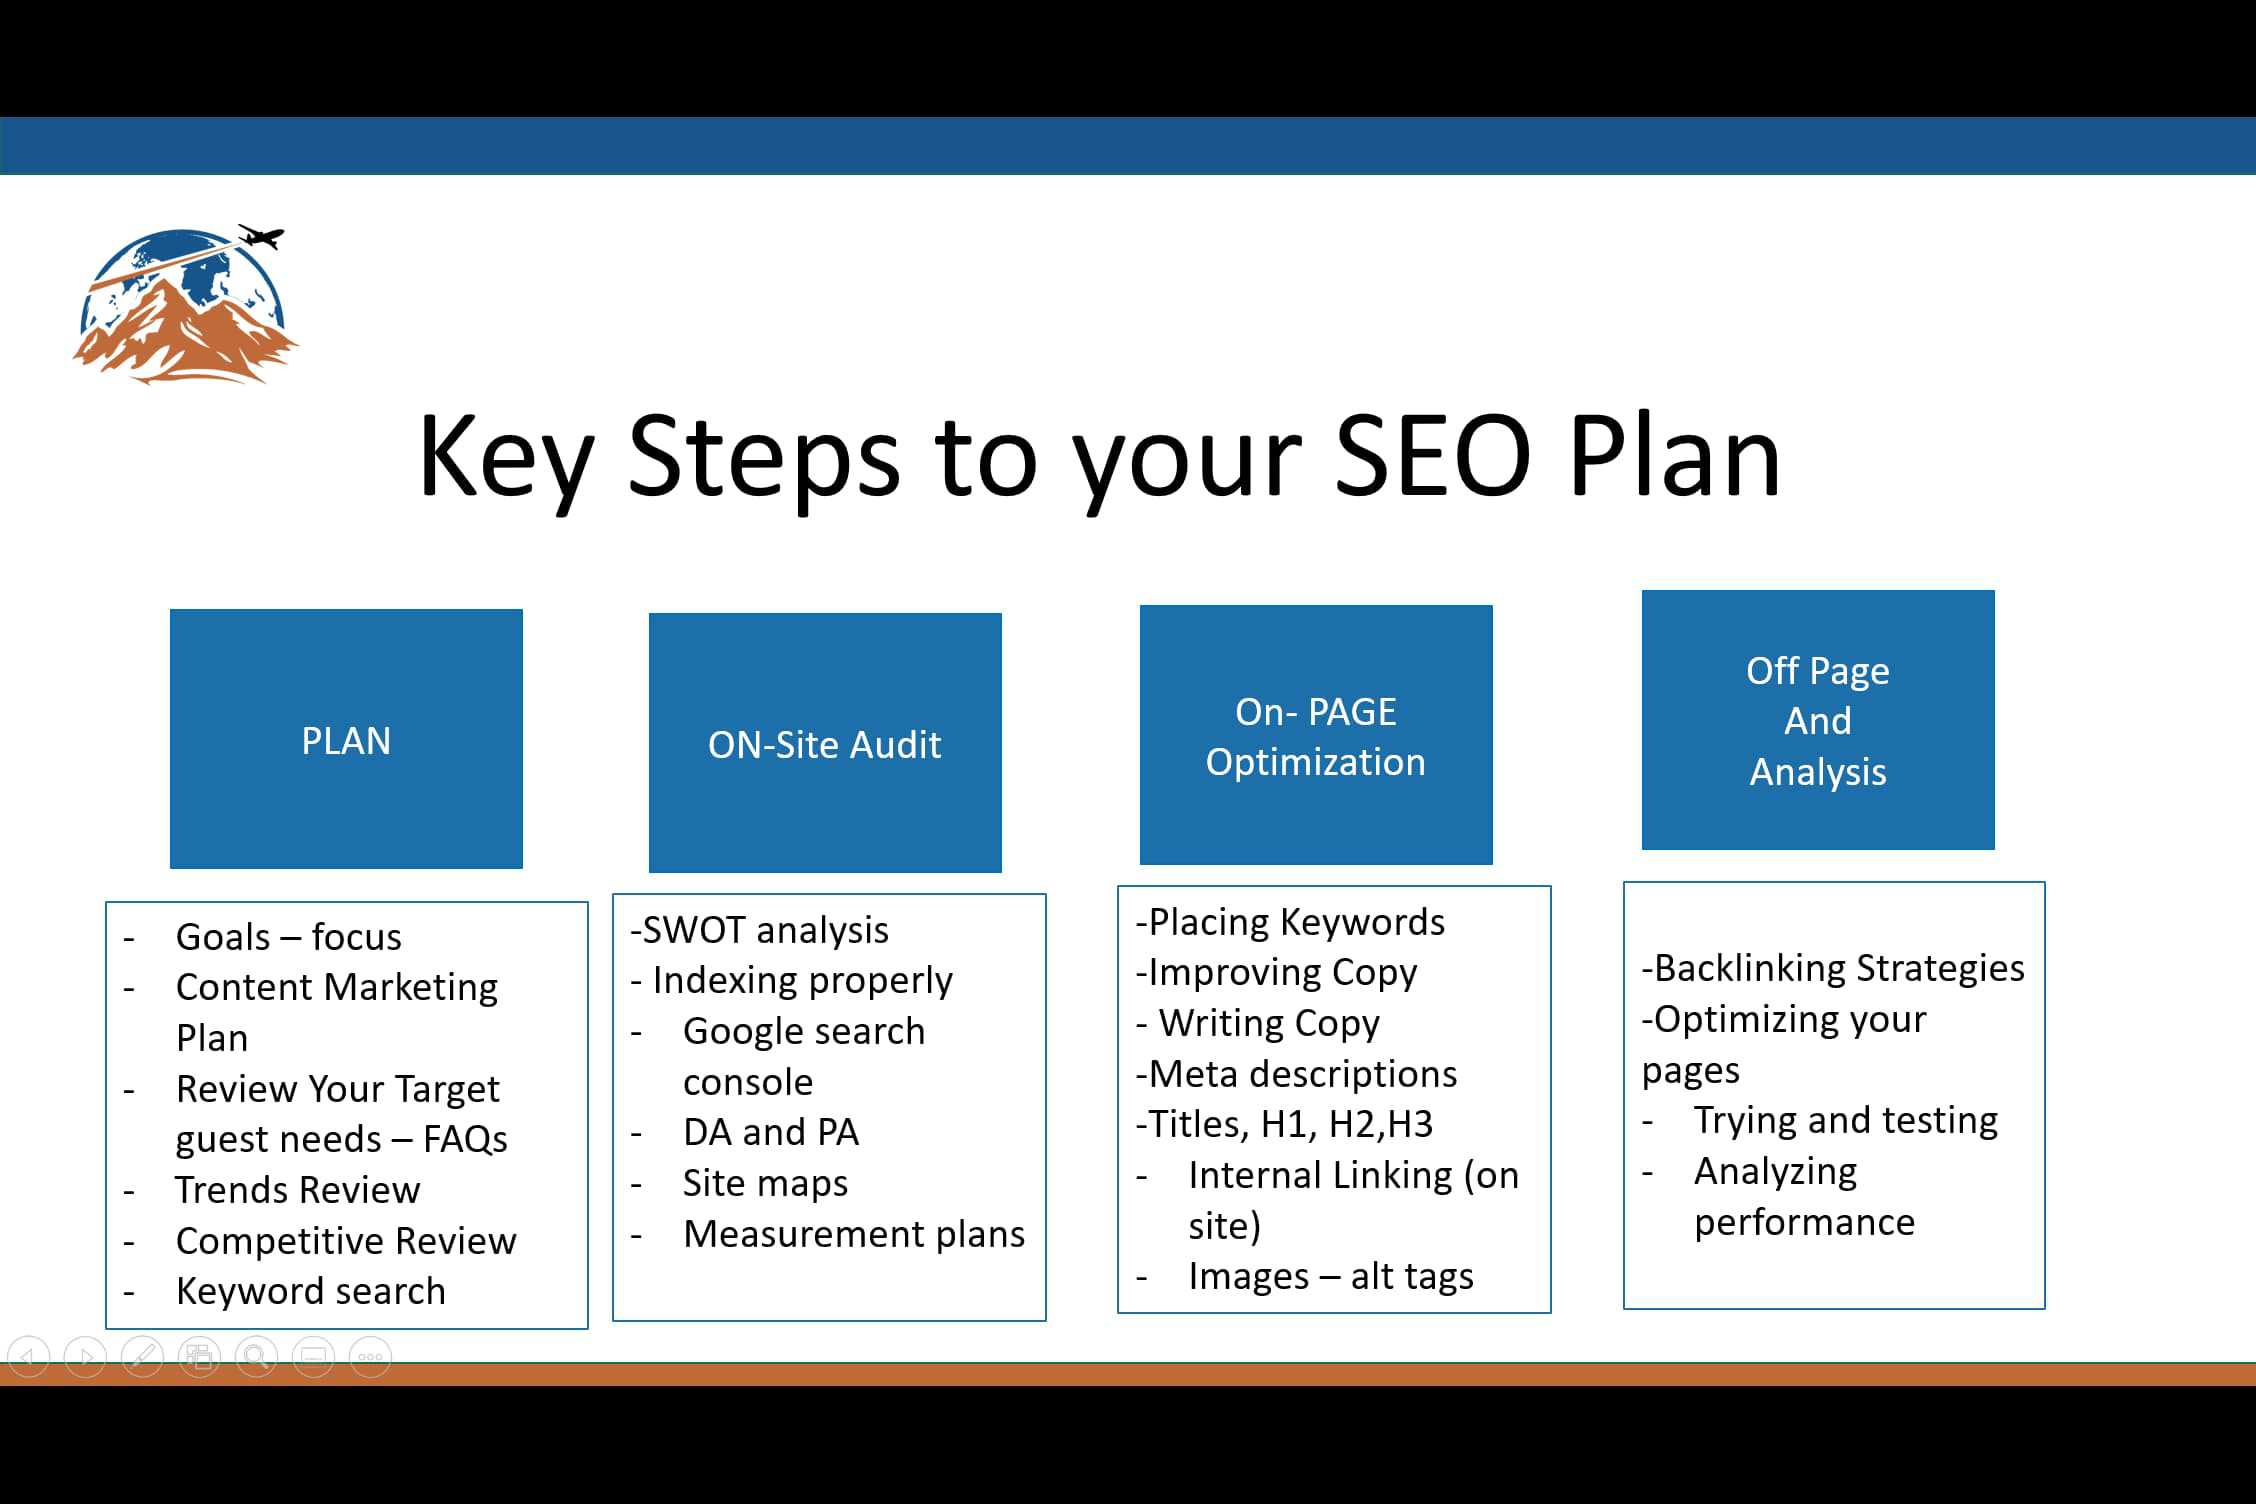 Key steps for an SEO plan